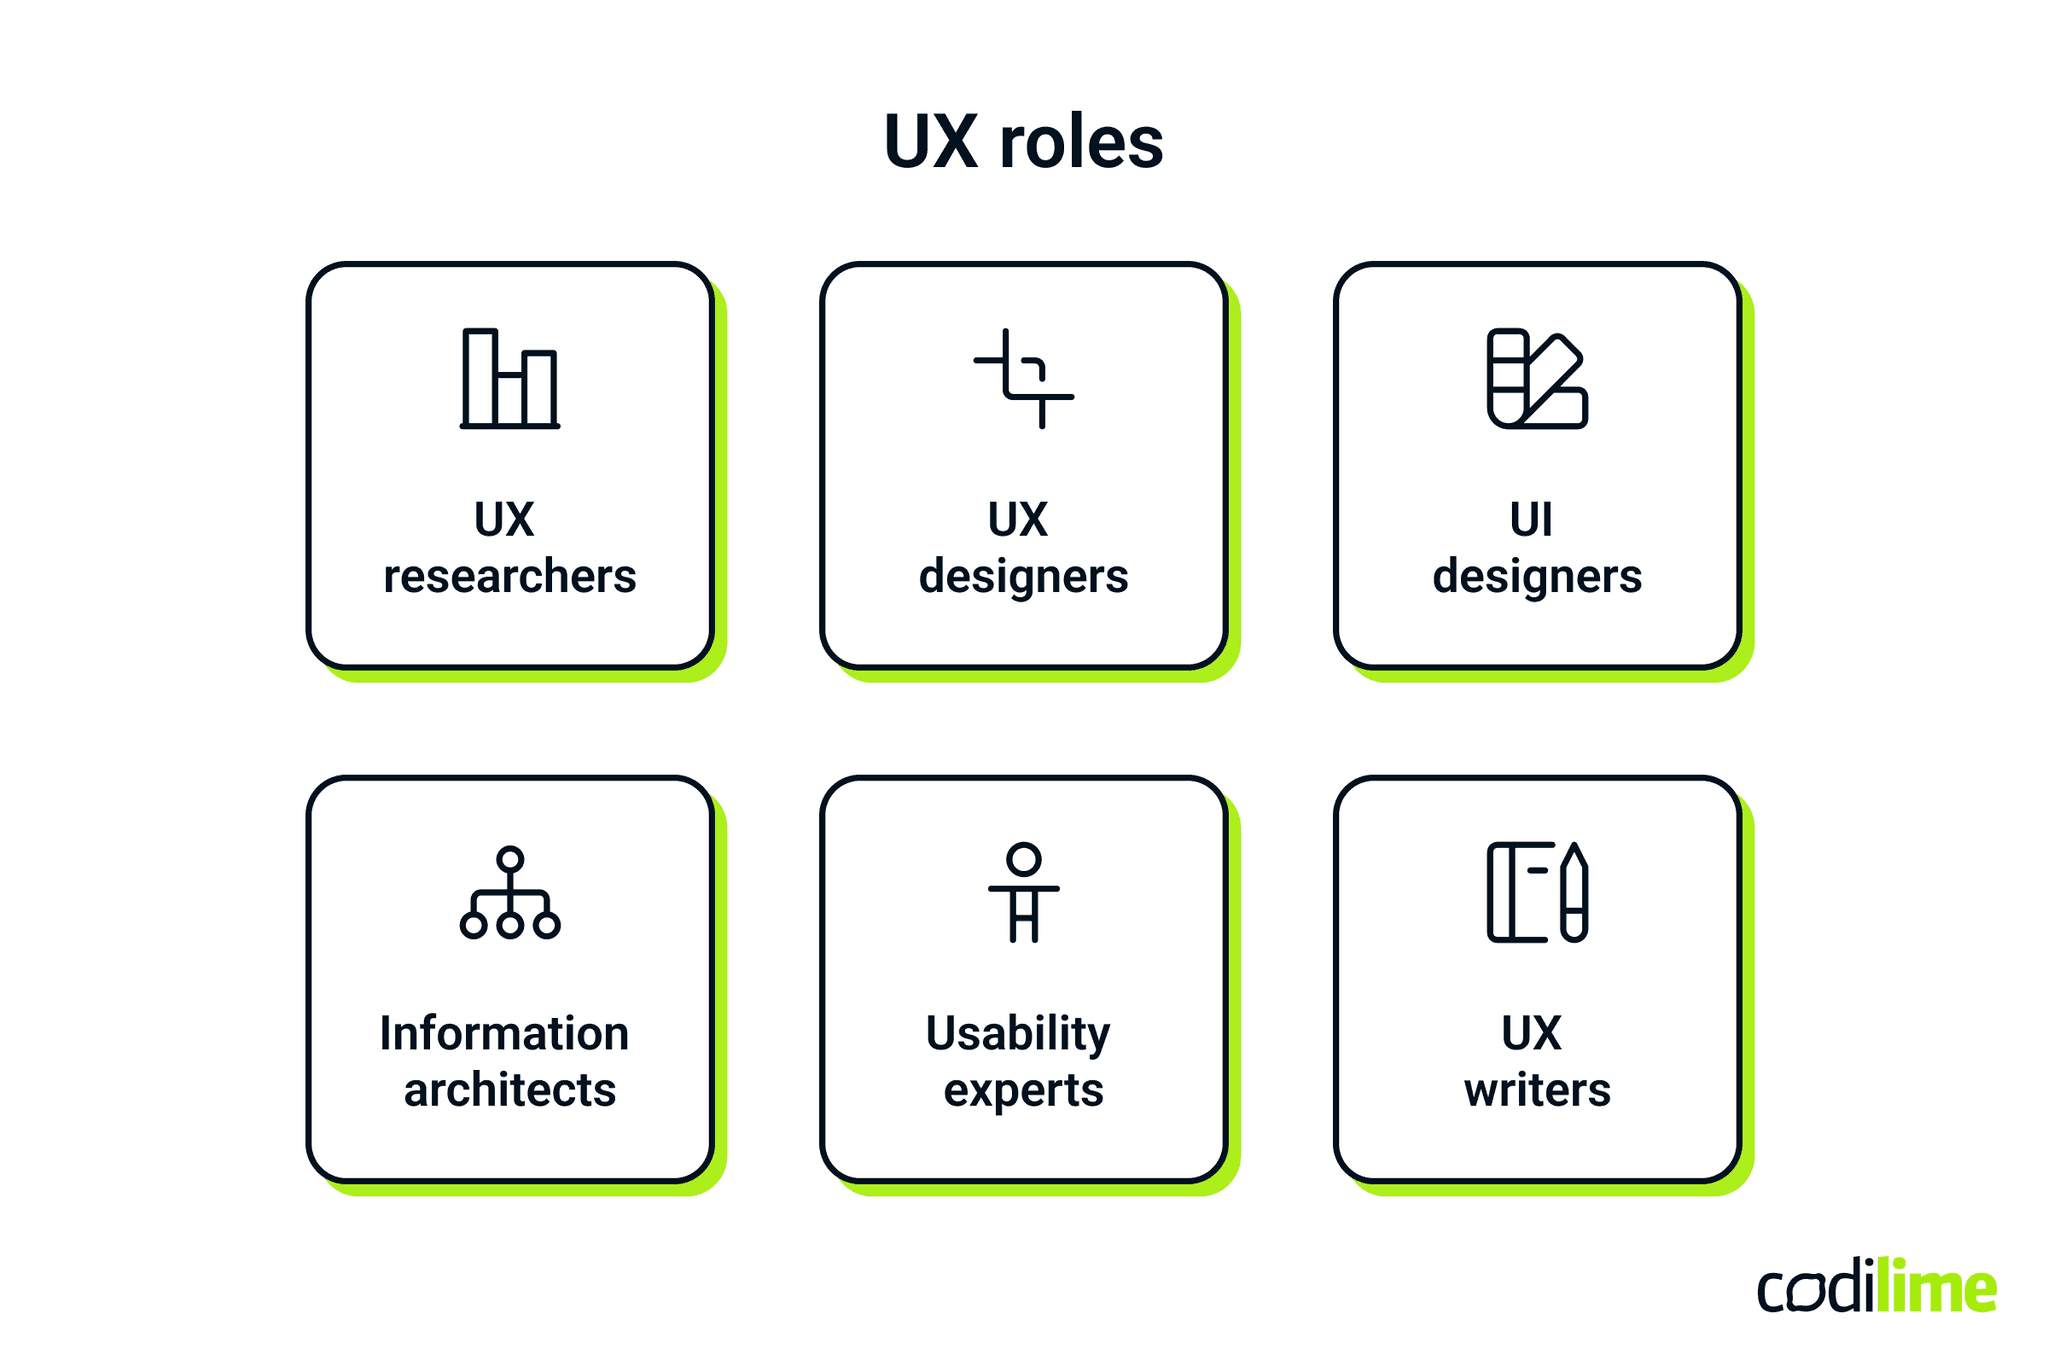 Roles in a UX design team